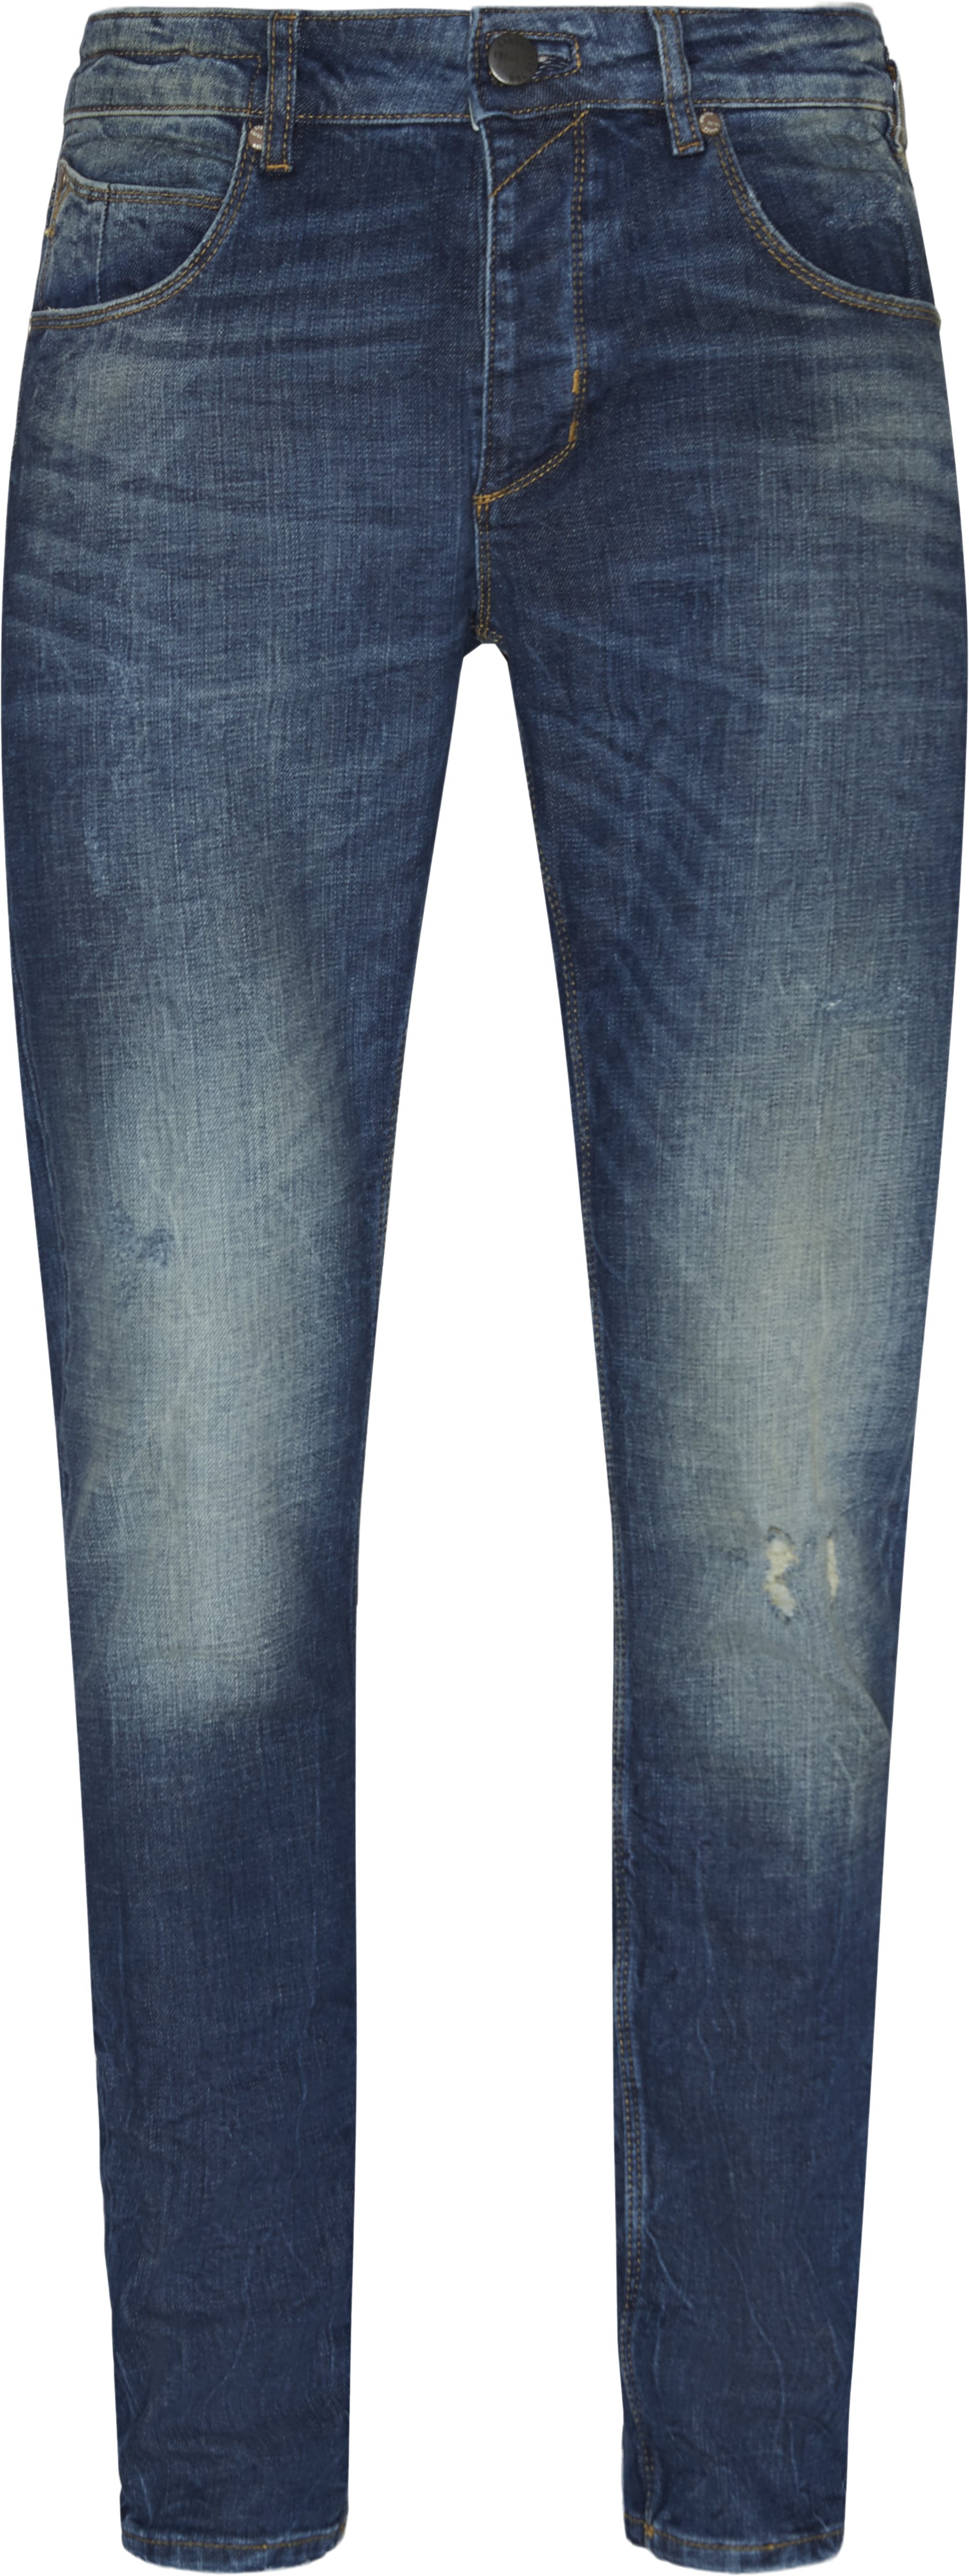 Rey Jeans - Jeans - Slim fit - Denim